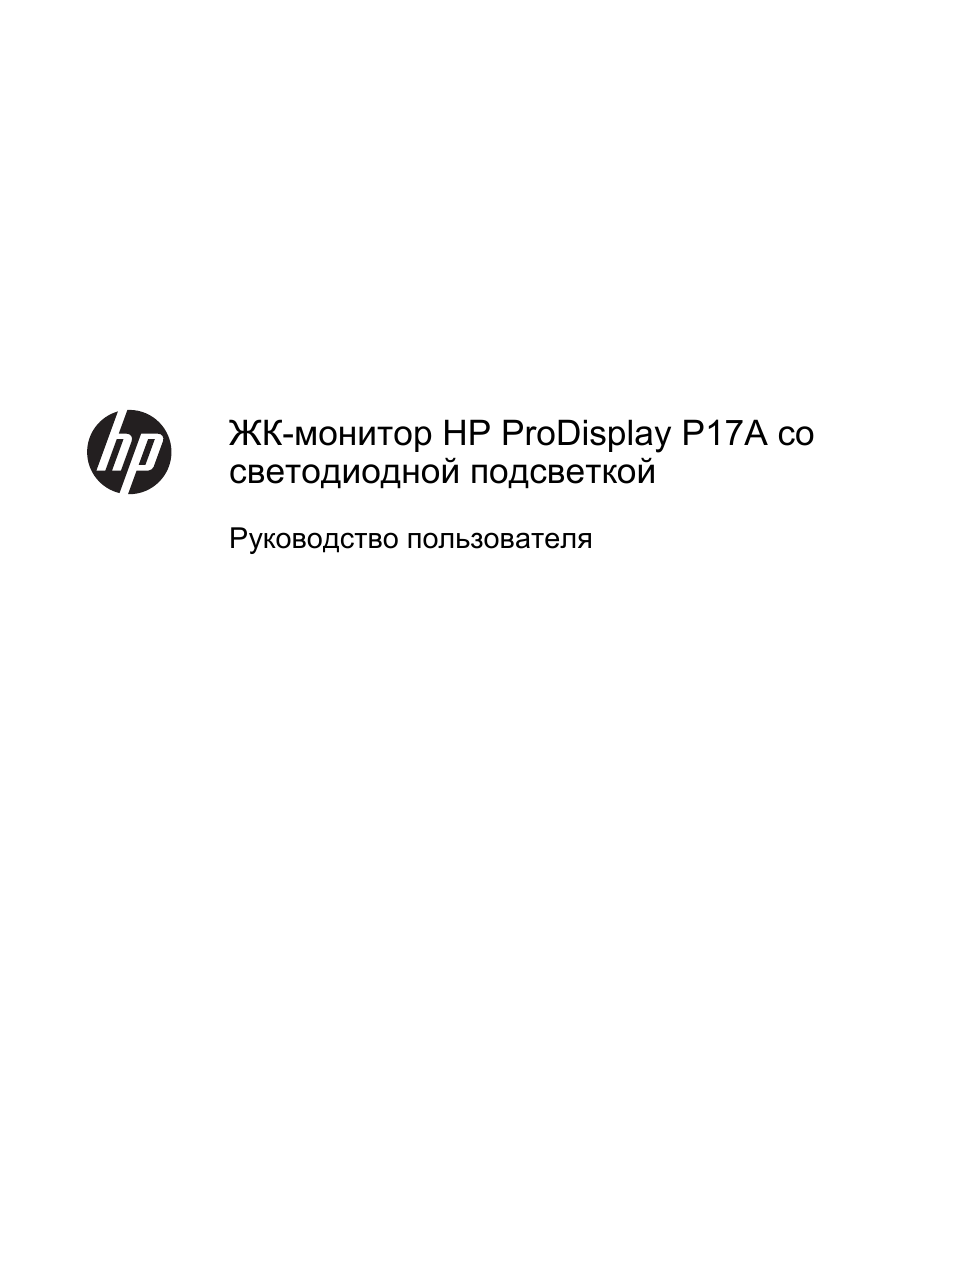 Инструкция по эксплуатации HP Монитор HP ProDisplay P17A 17 inch 54 светодиодная подсветка | 20 страниц